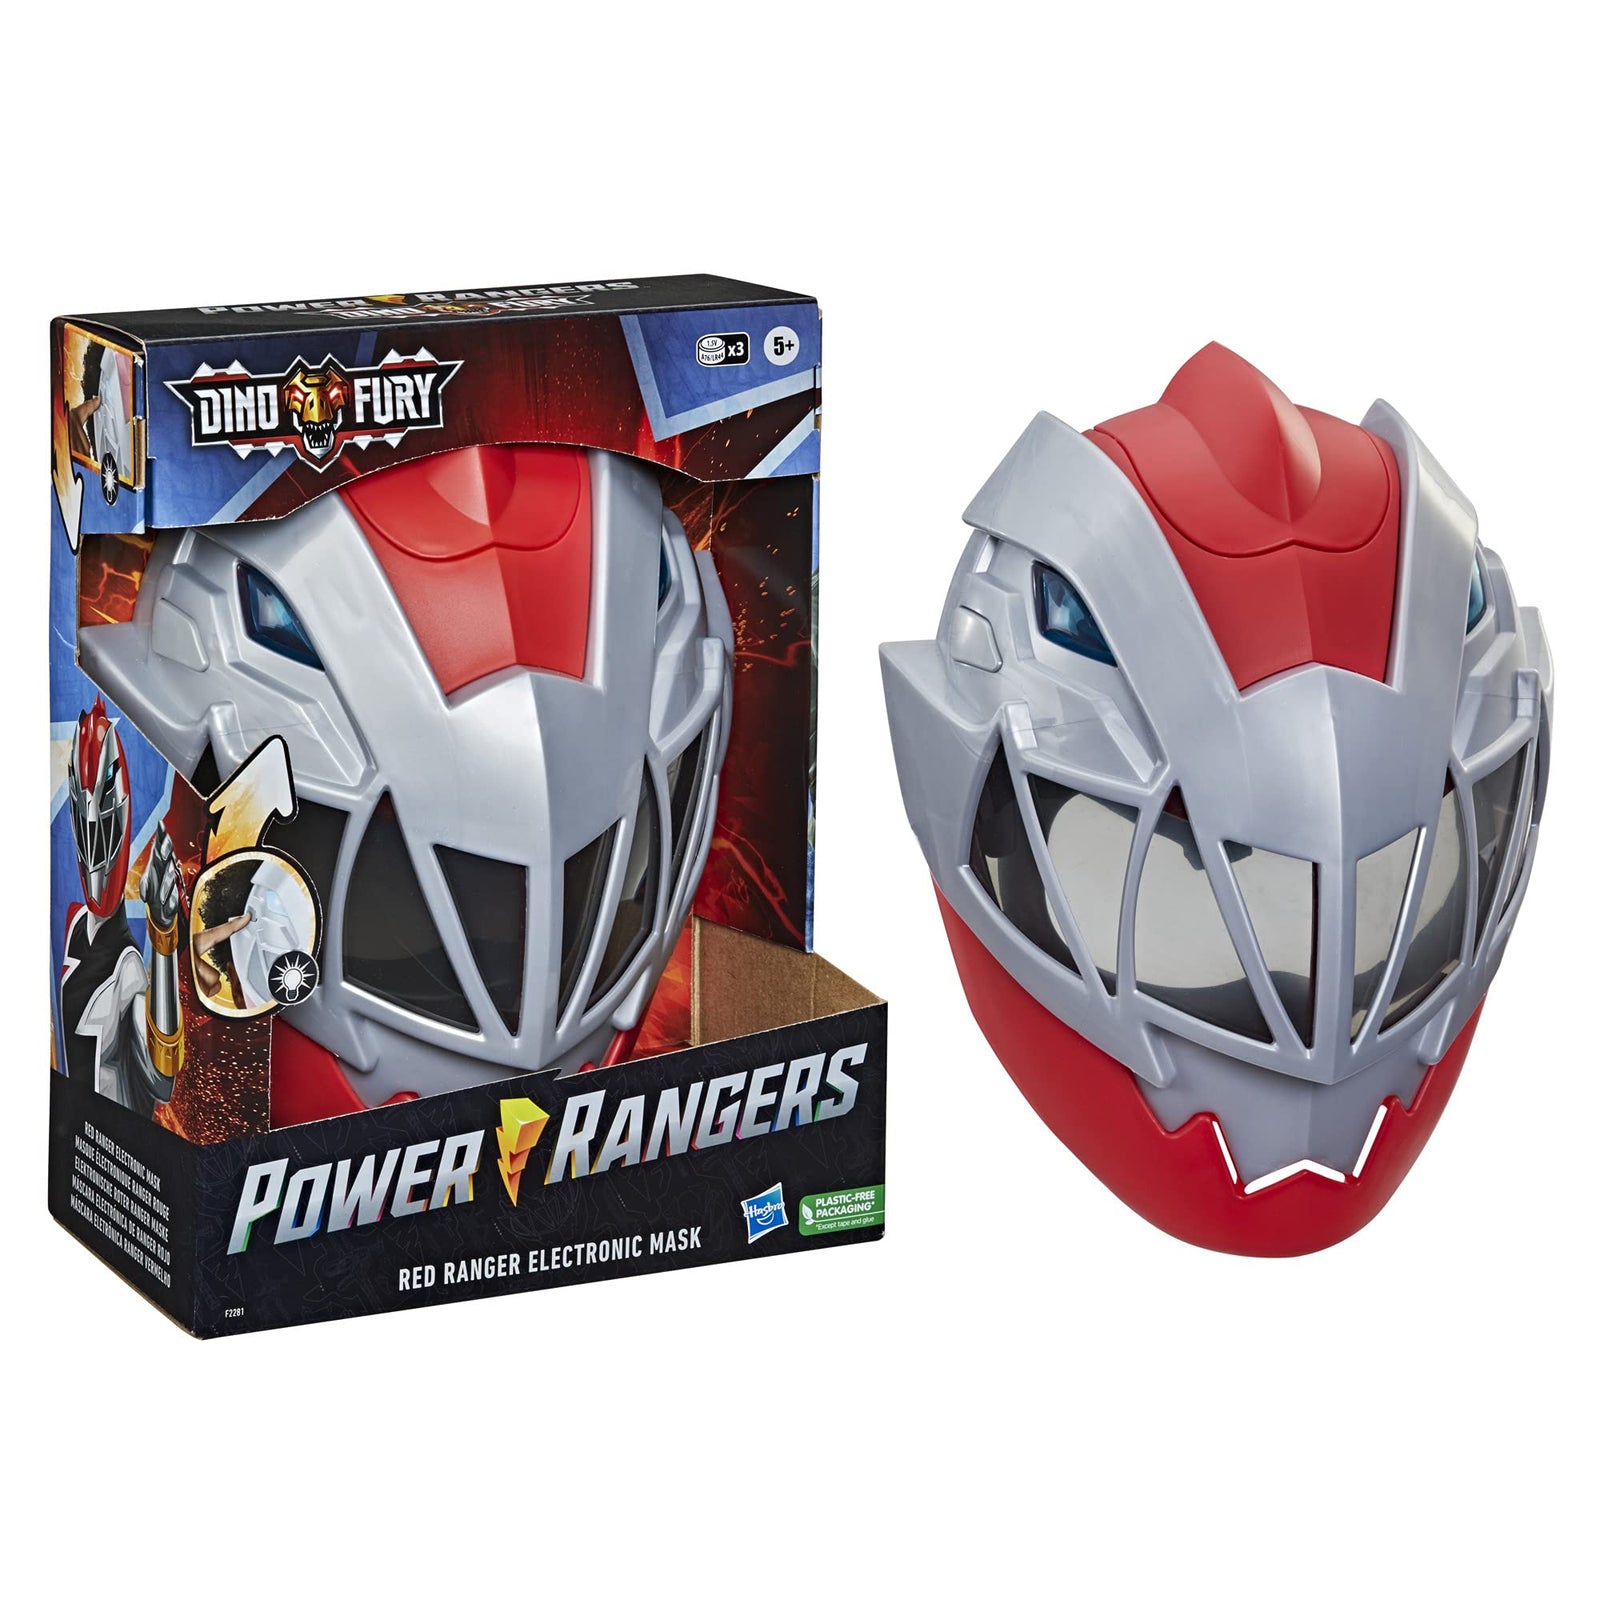 Power Rangers PRG DNF RED Ranger Electronic MASK